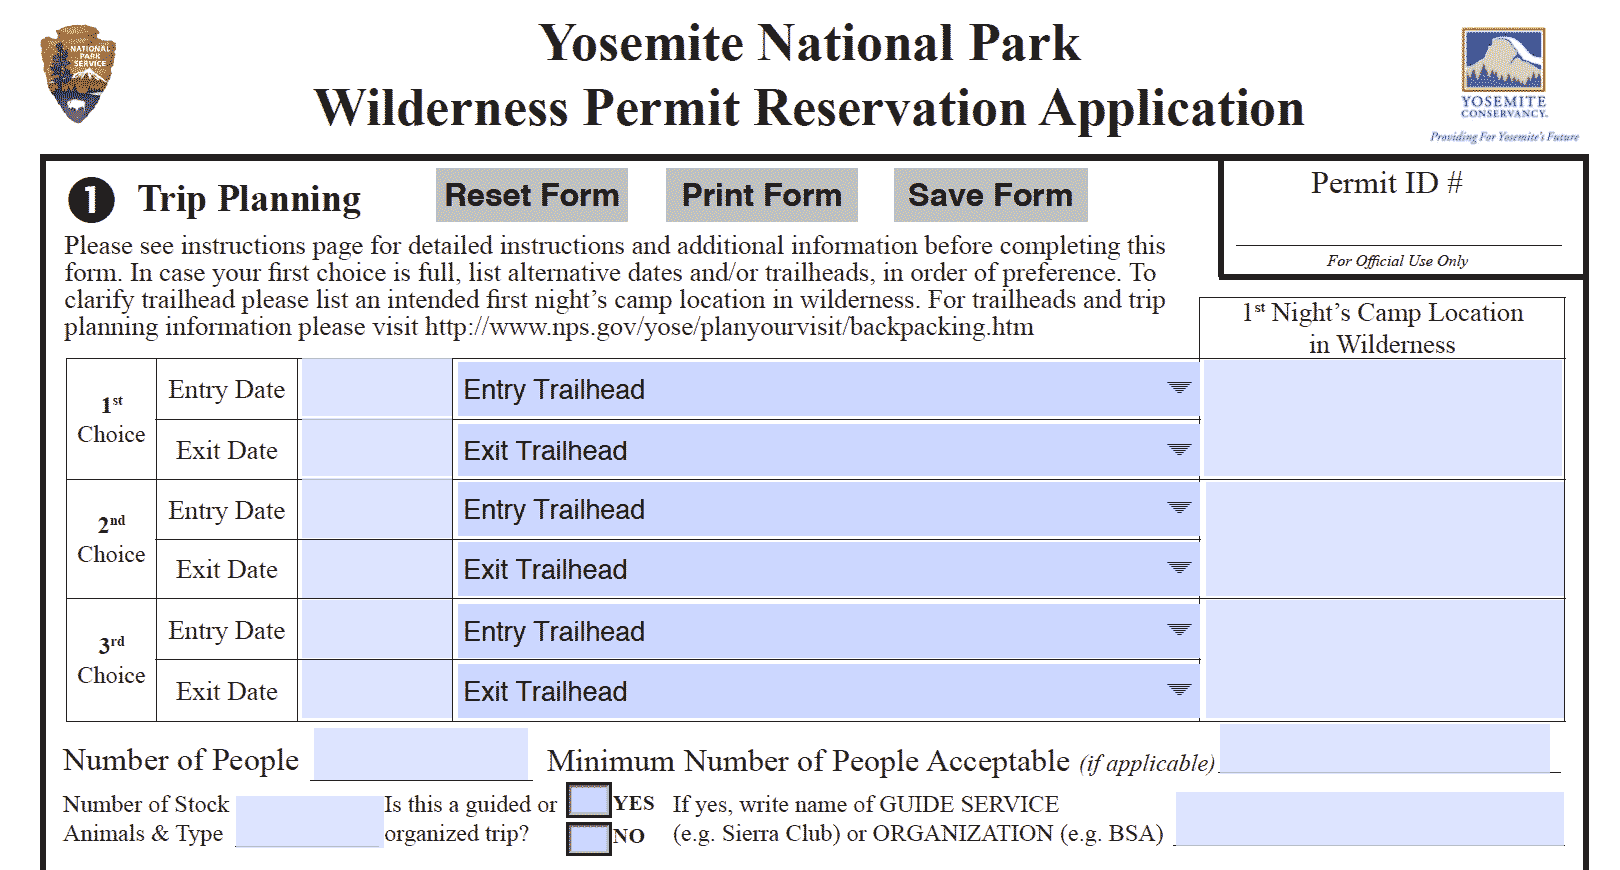 Yosemite wilderness permits